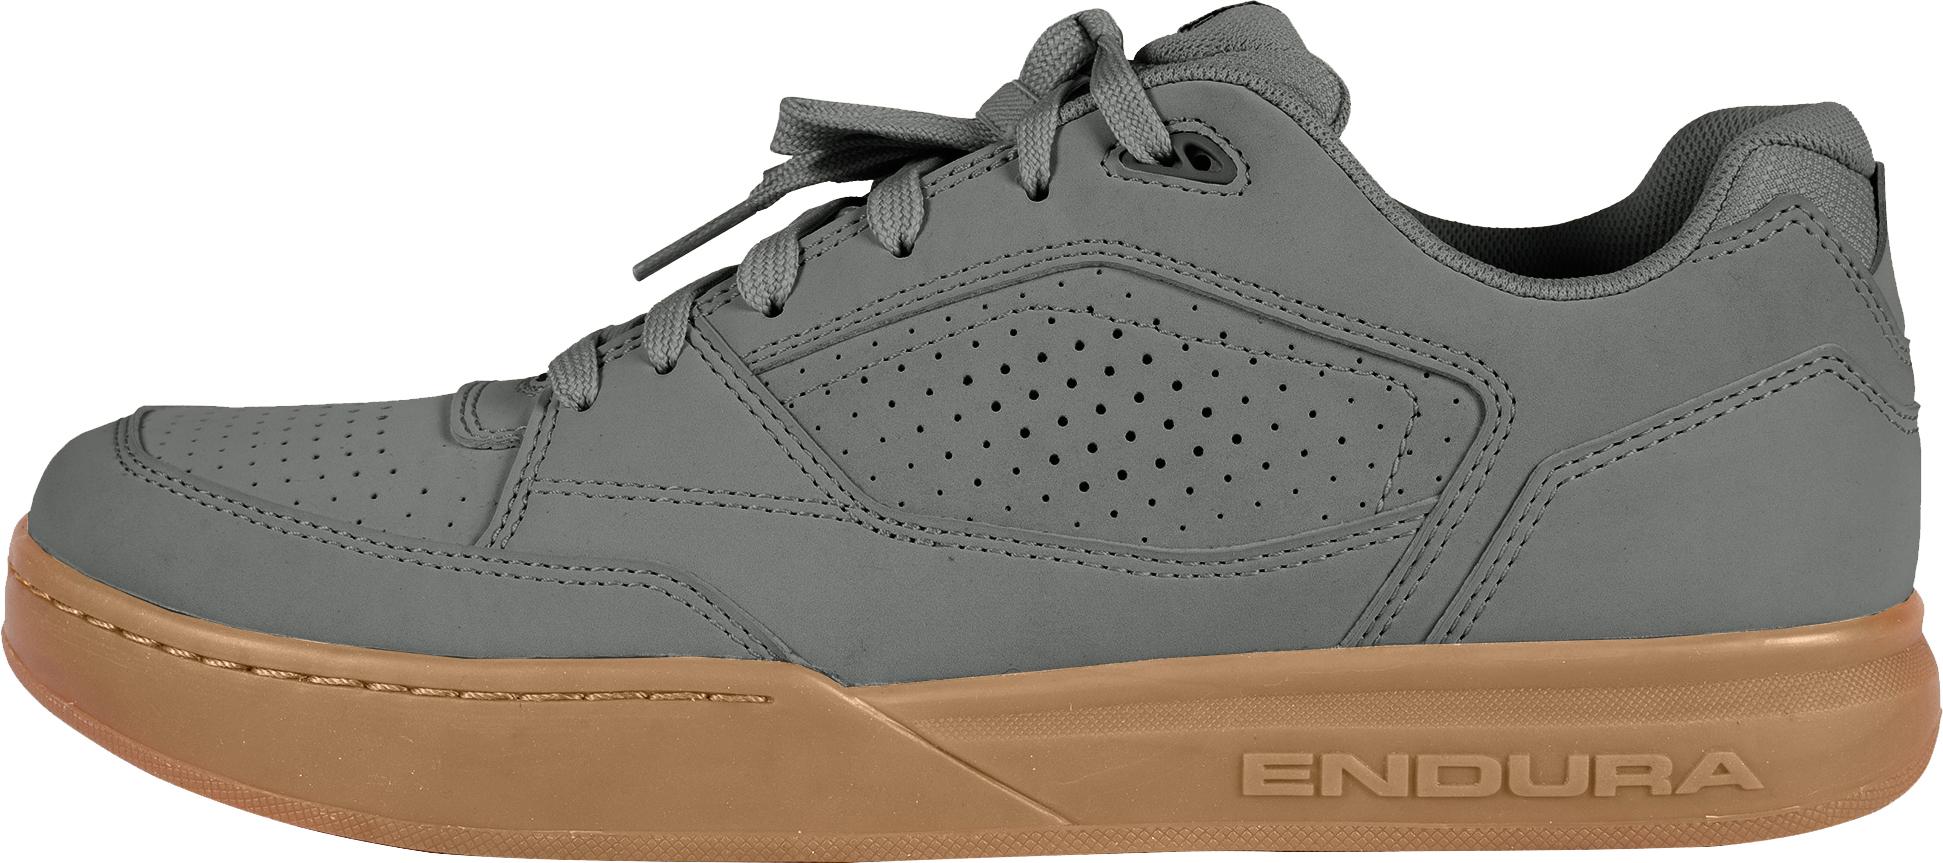 Endura Hummvee Flat Pedal Mtb Shoes - Pewter Grey